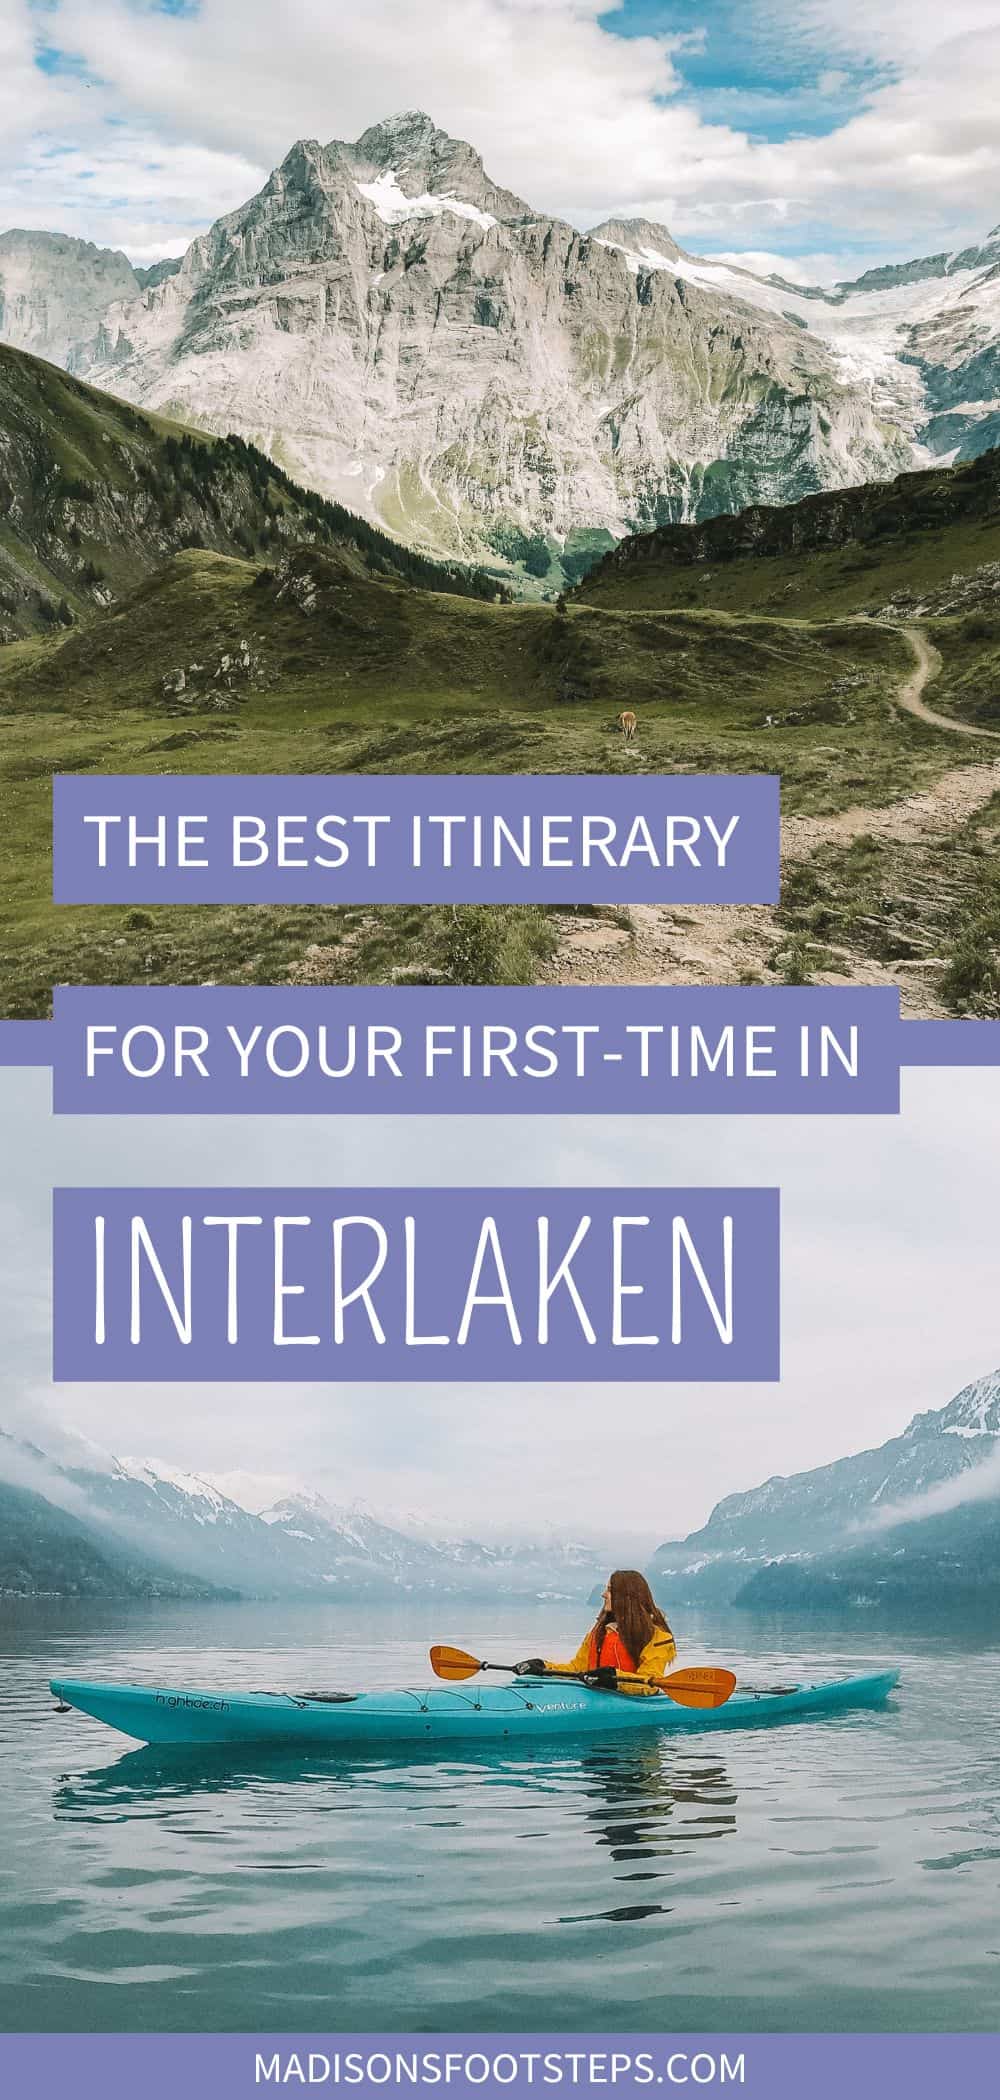 Pinterest image for my Interlaken itinerary.